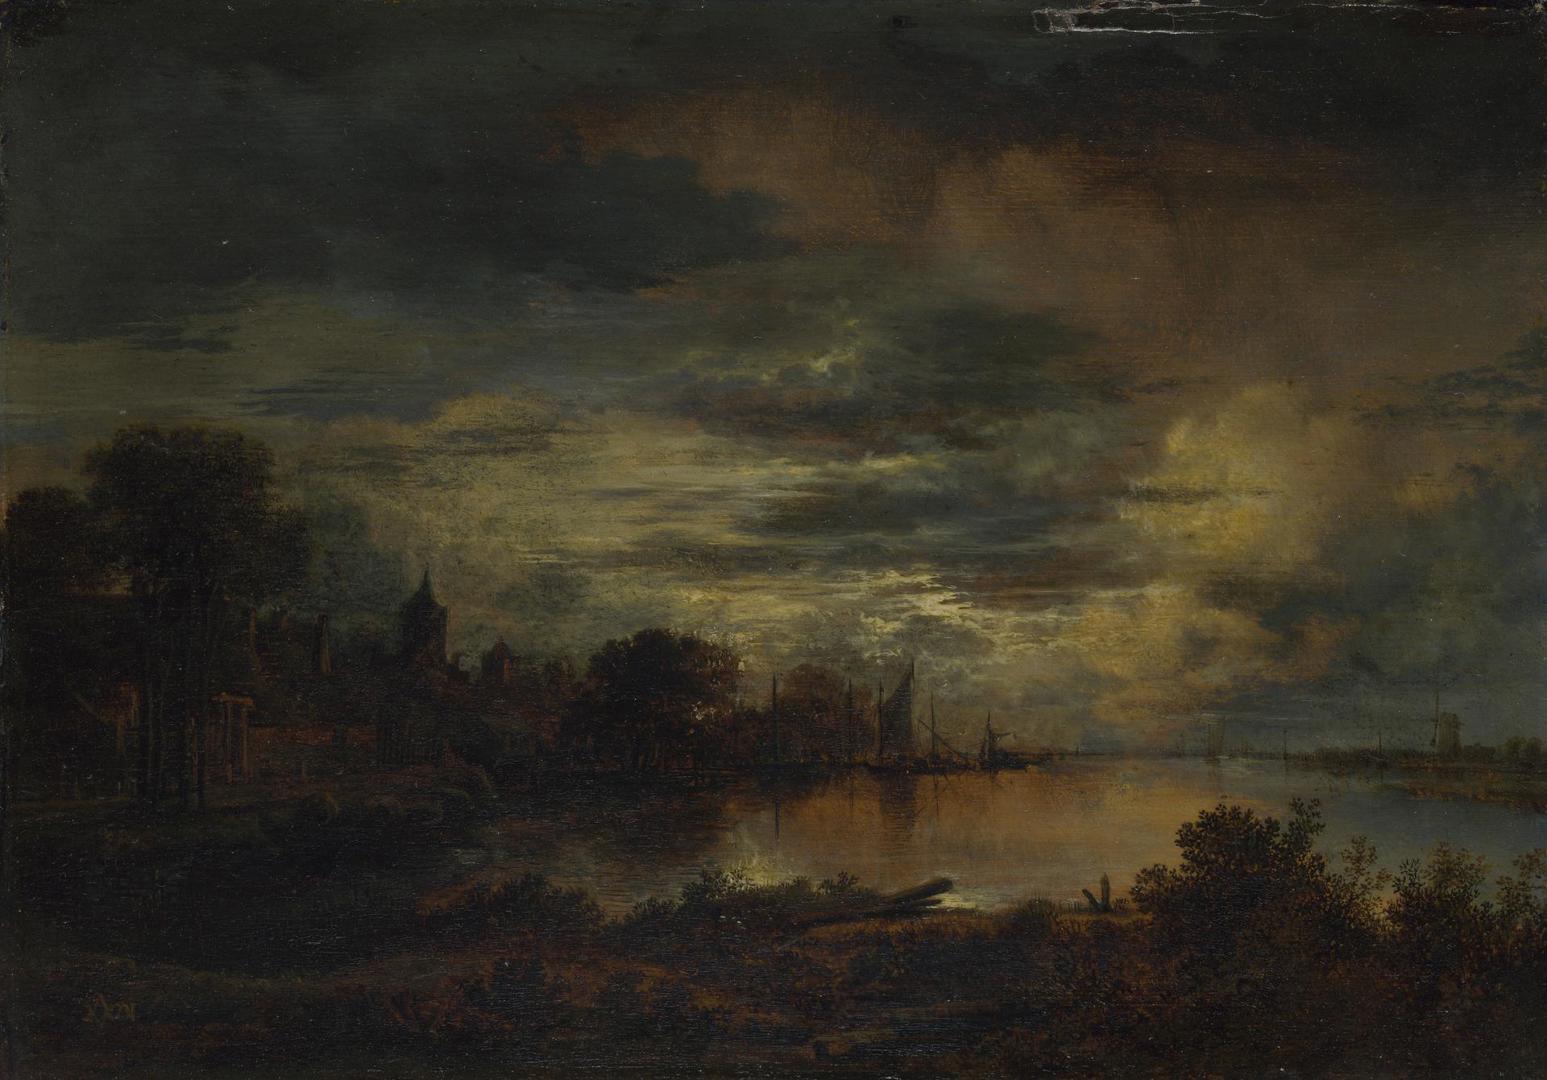 A Village by a River in Moonlight by Aert van der Neer